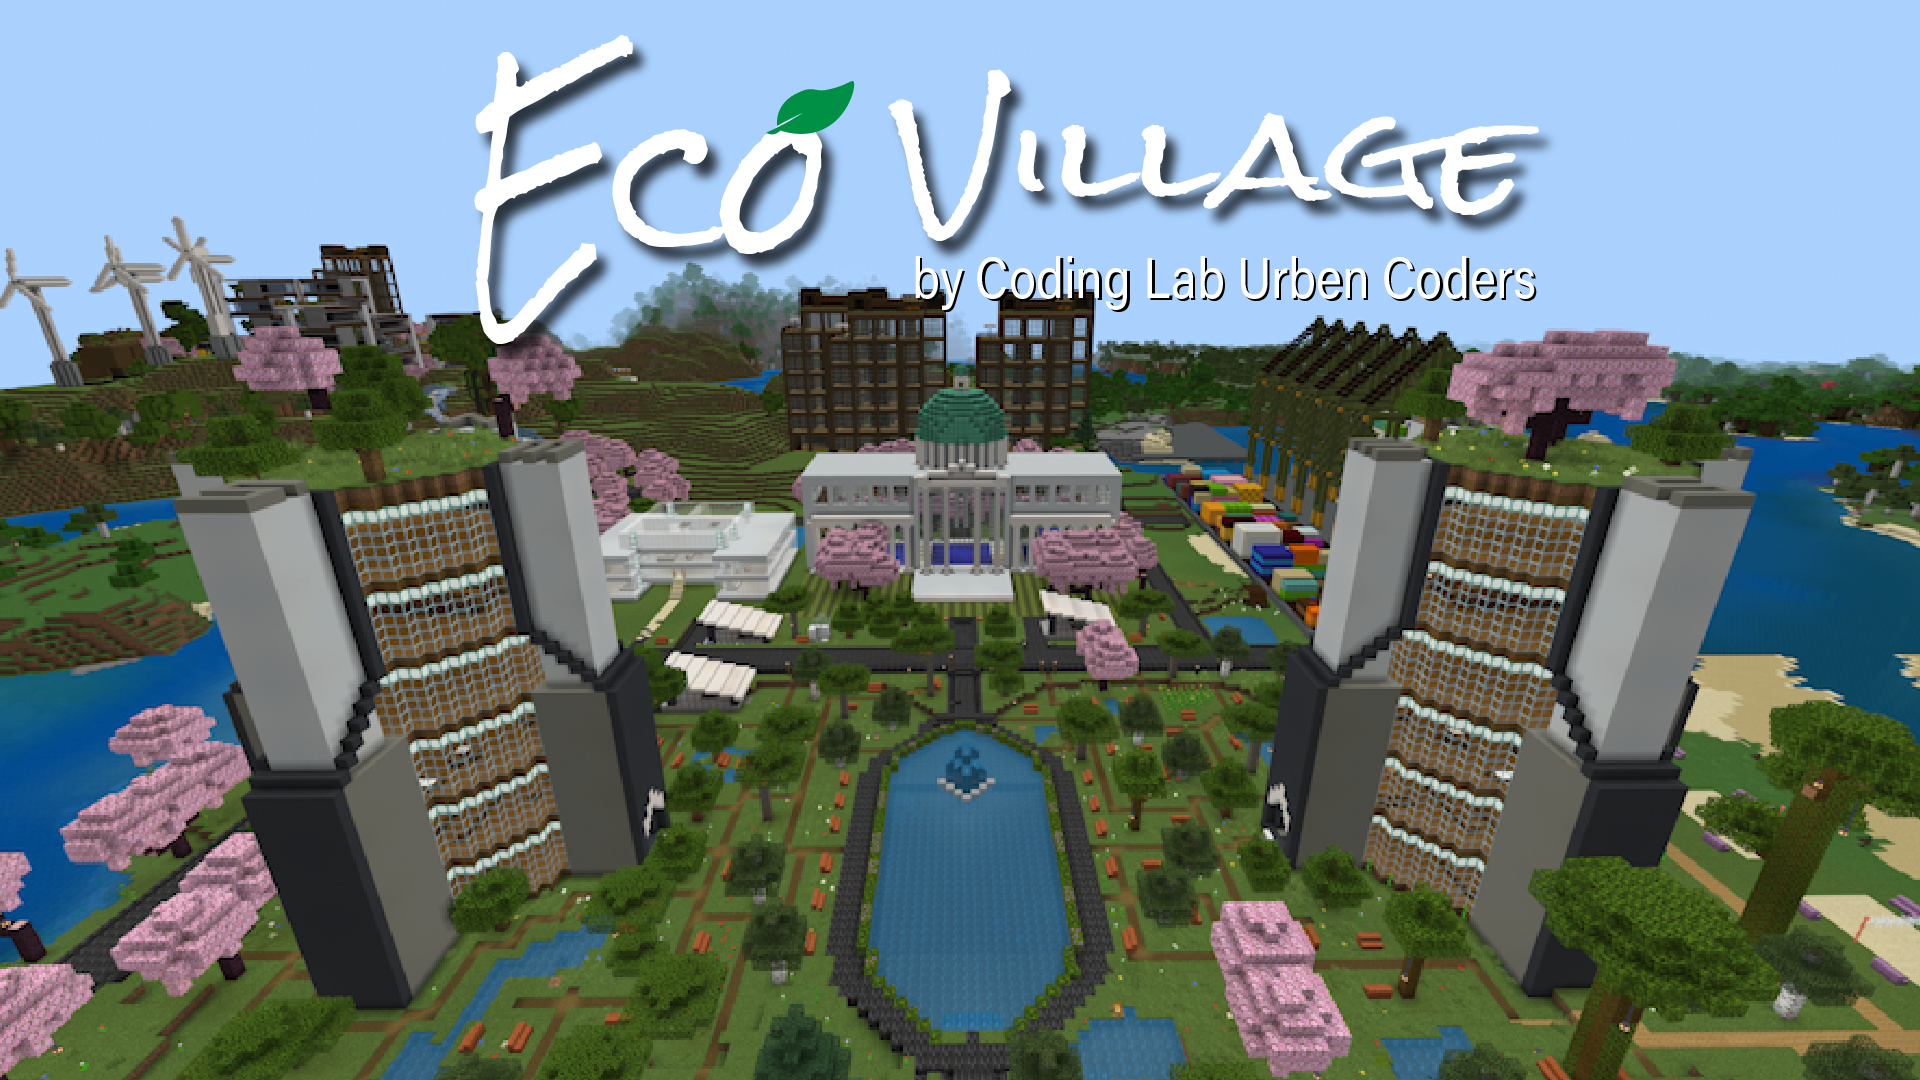 Eco Village - 最新テクノロジーを利用し、もっとクリーンエネルギーの社会へ